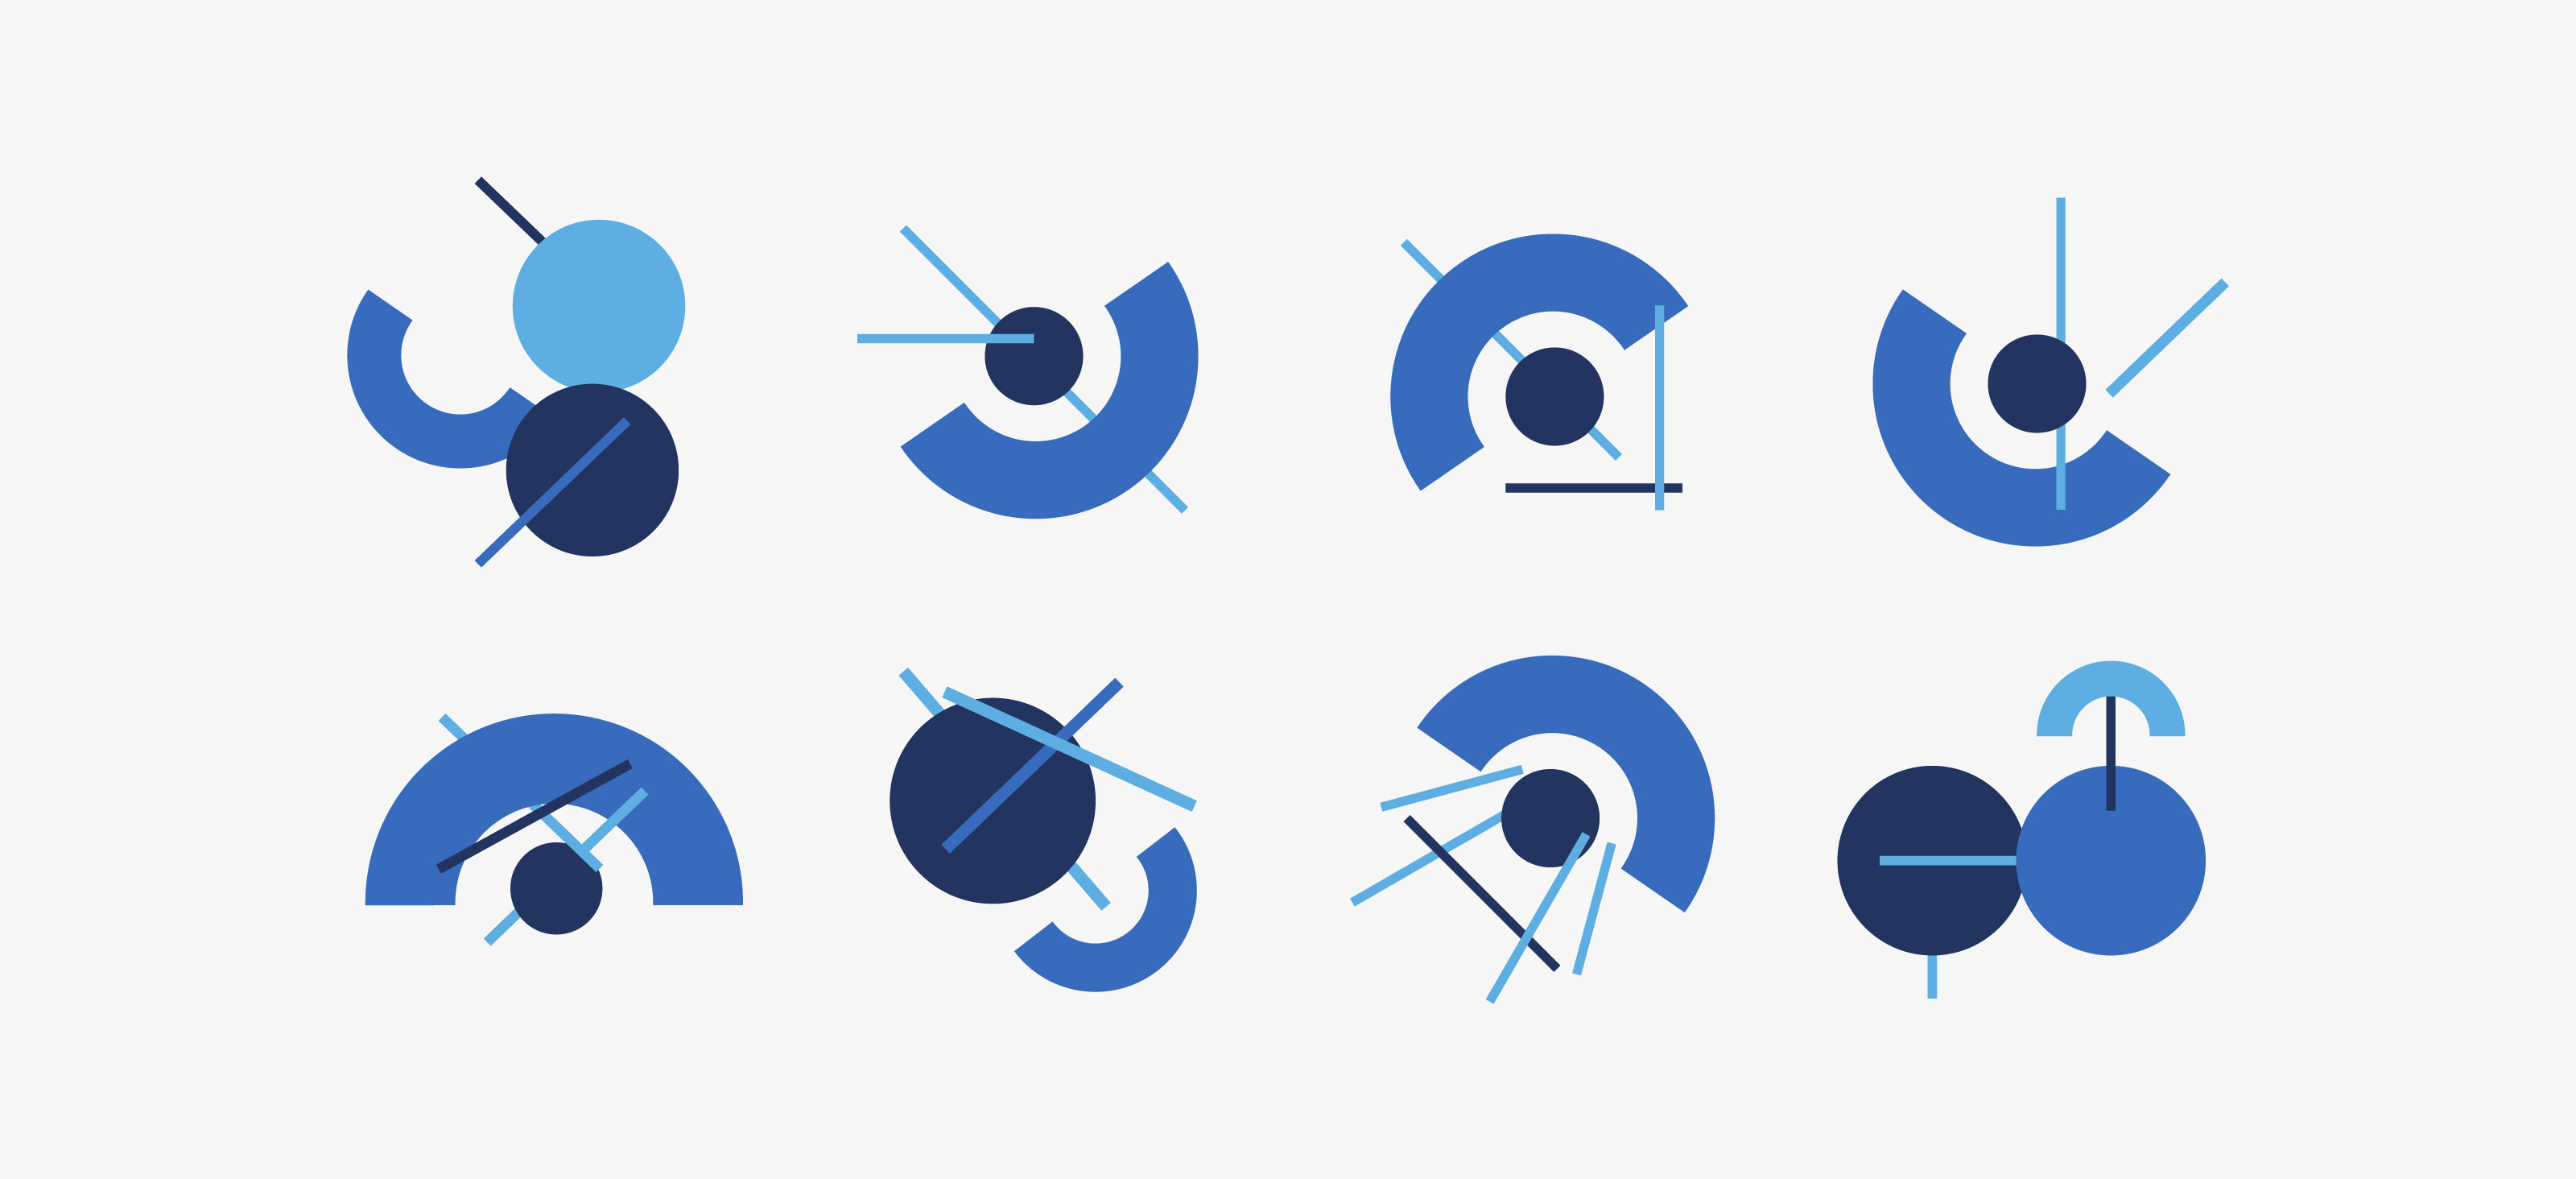 clocktower brand identity design corporate icons abstract